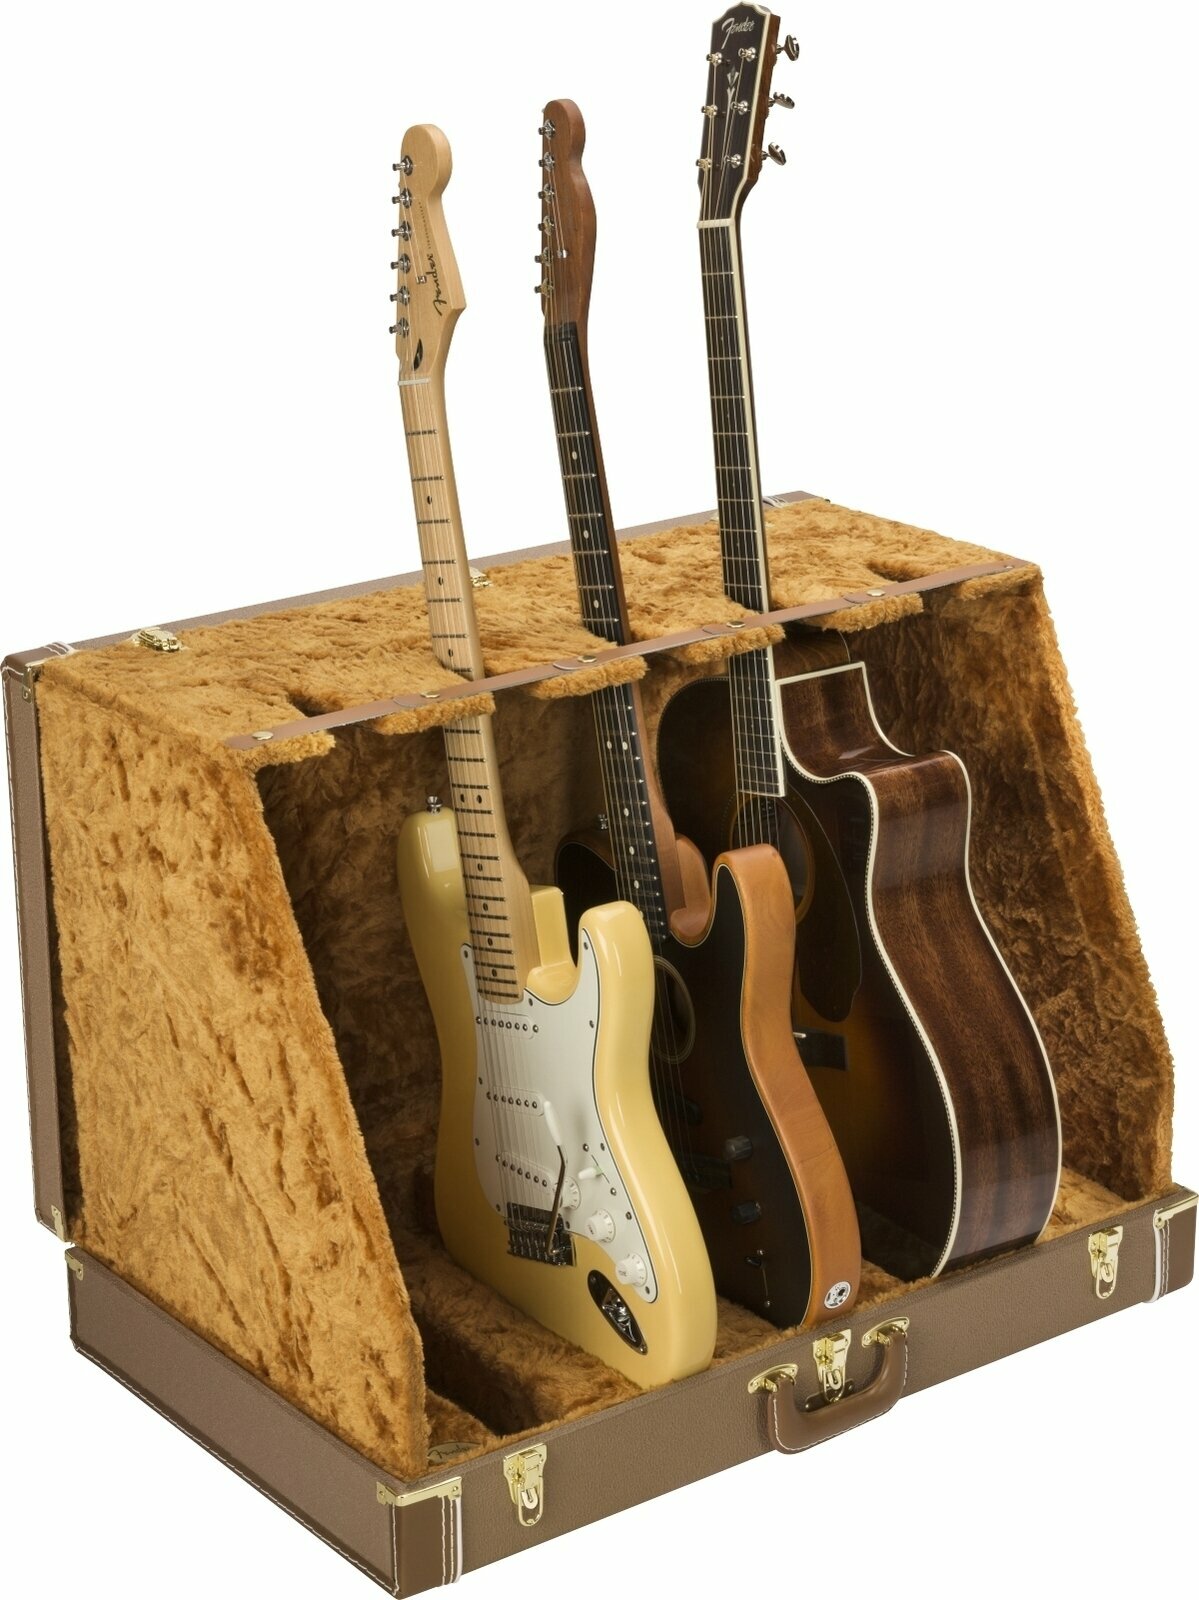 Fender Classic Series Case Stand 5 Brown Stojan pro více kytar Fender